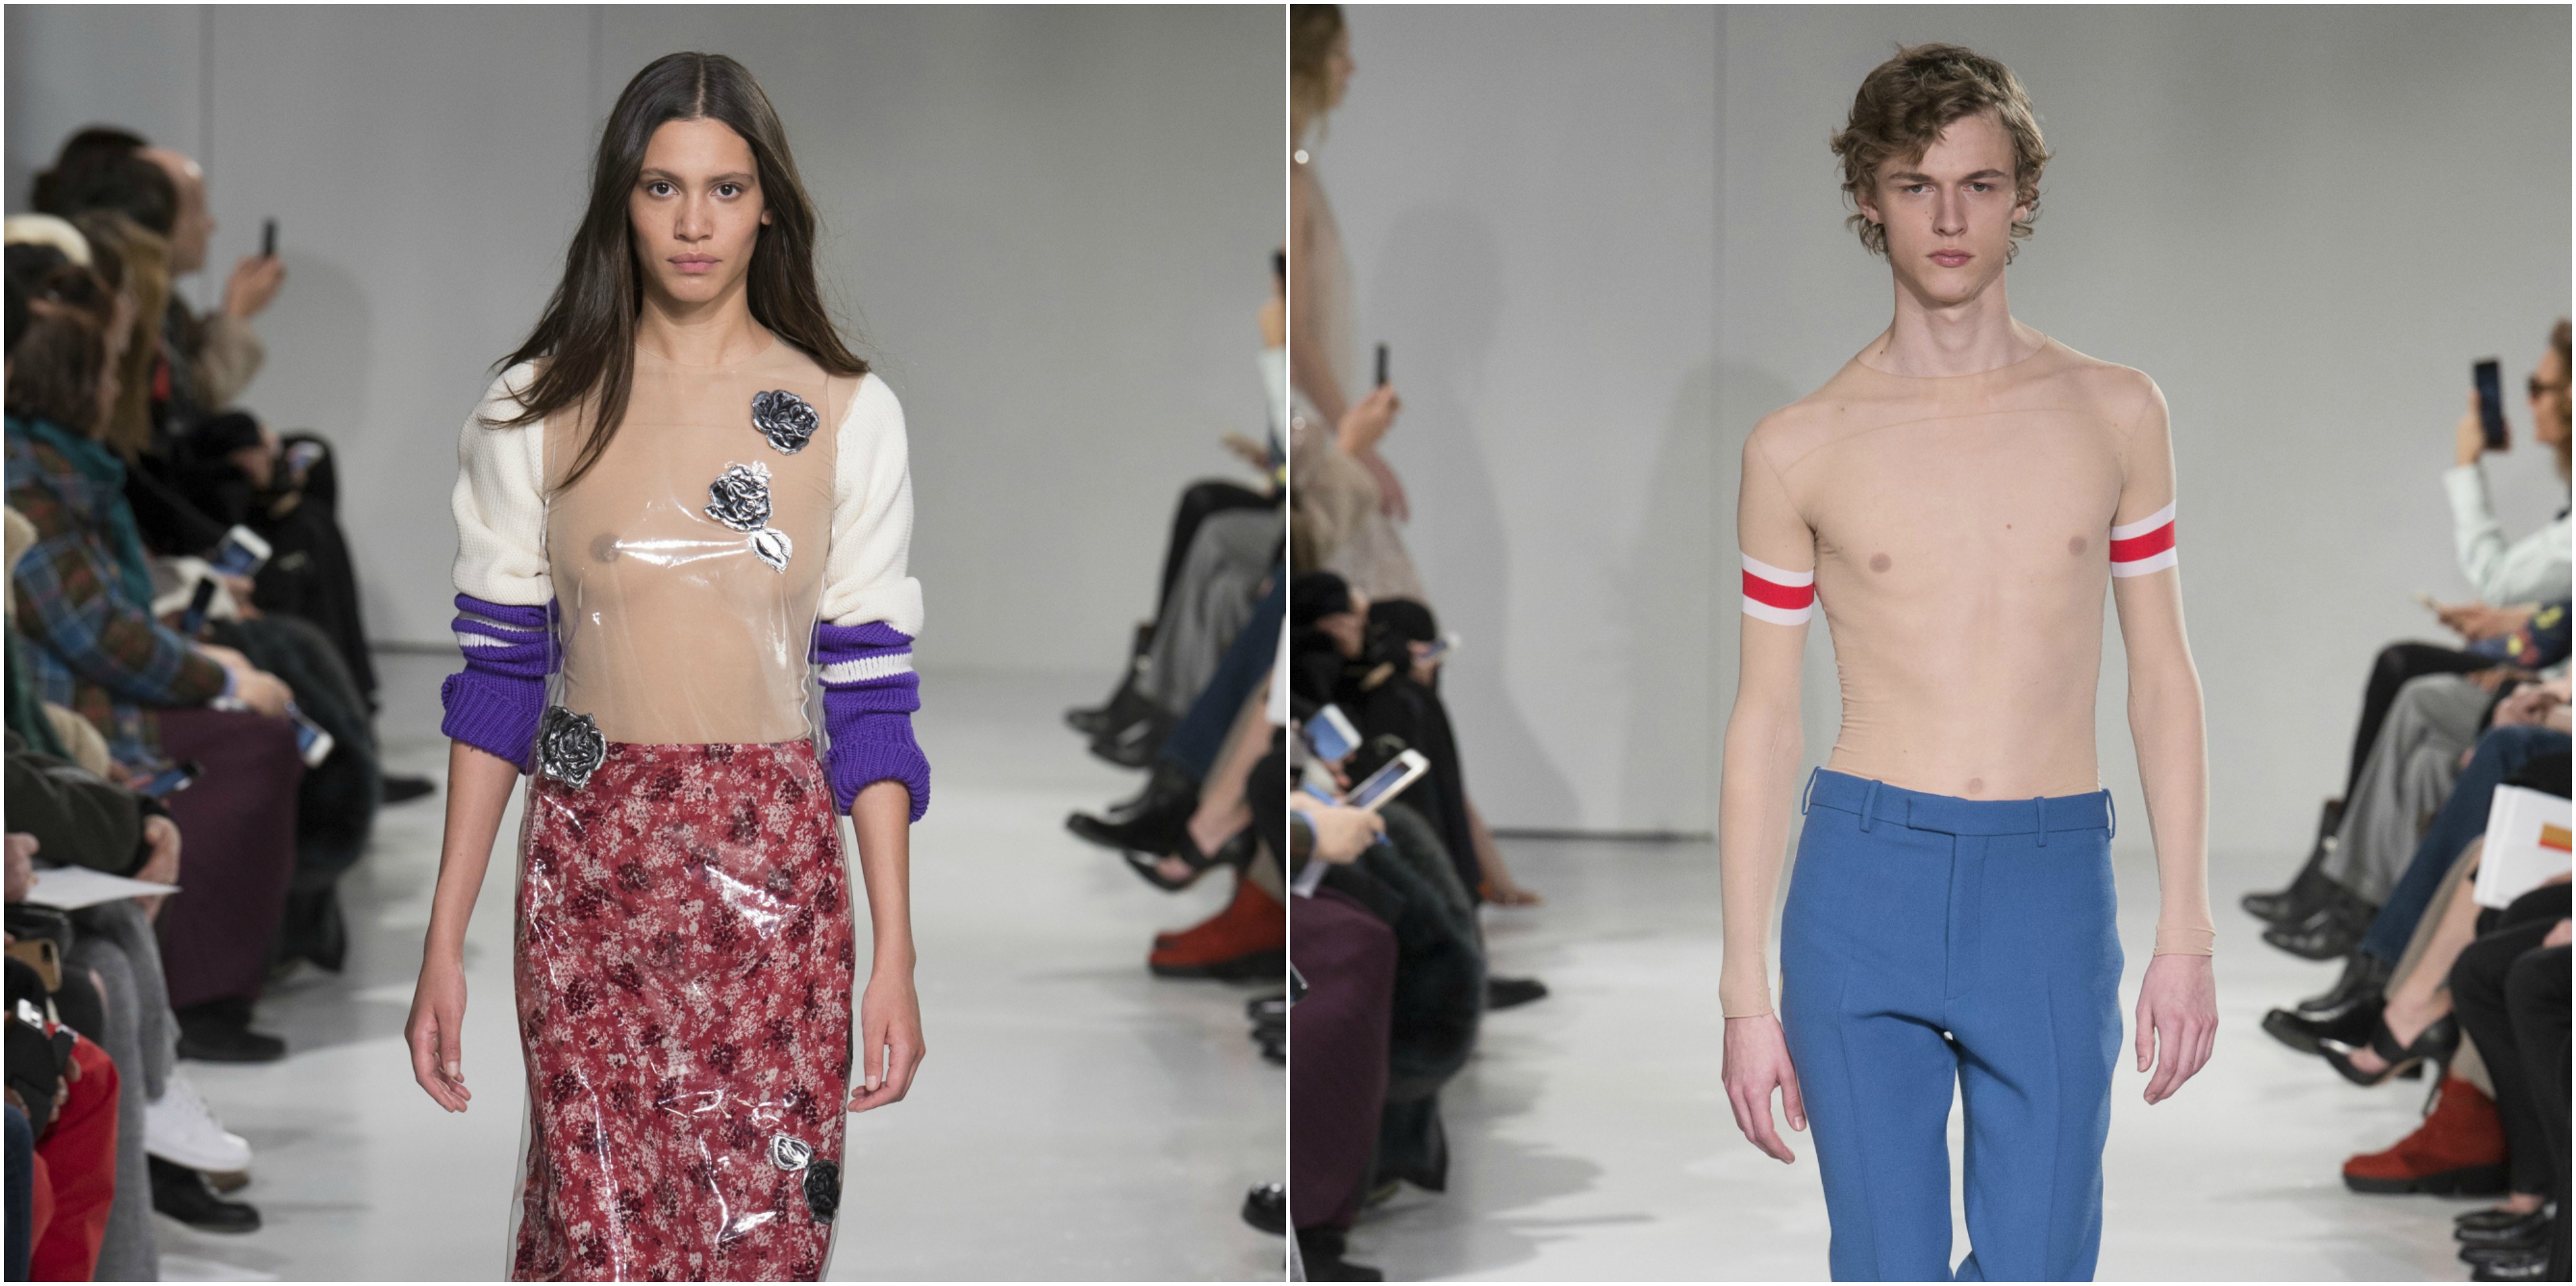 Calvin Klein leva o nude à roupa e ao extremo - MoveNotícias